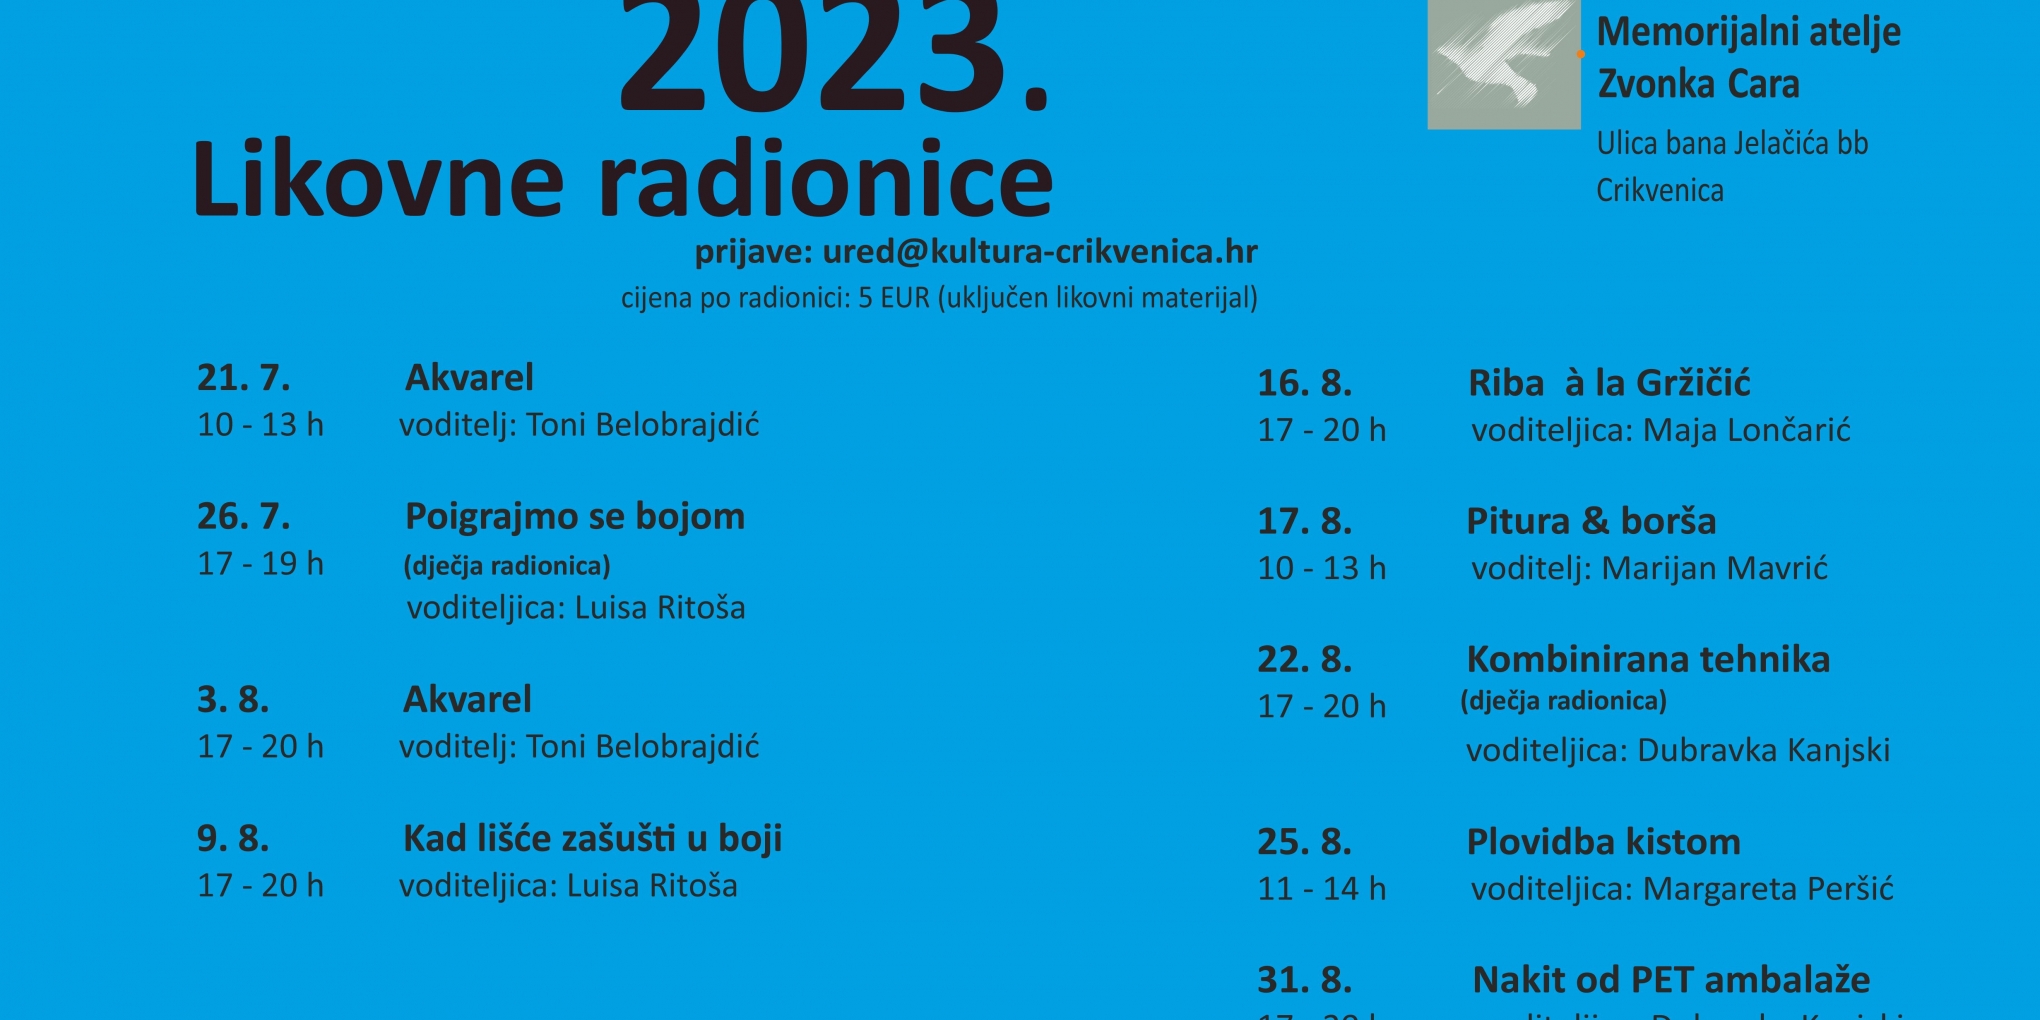 Likovne radionice 2023.